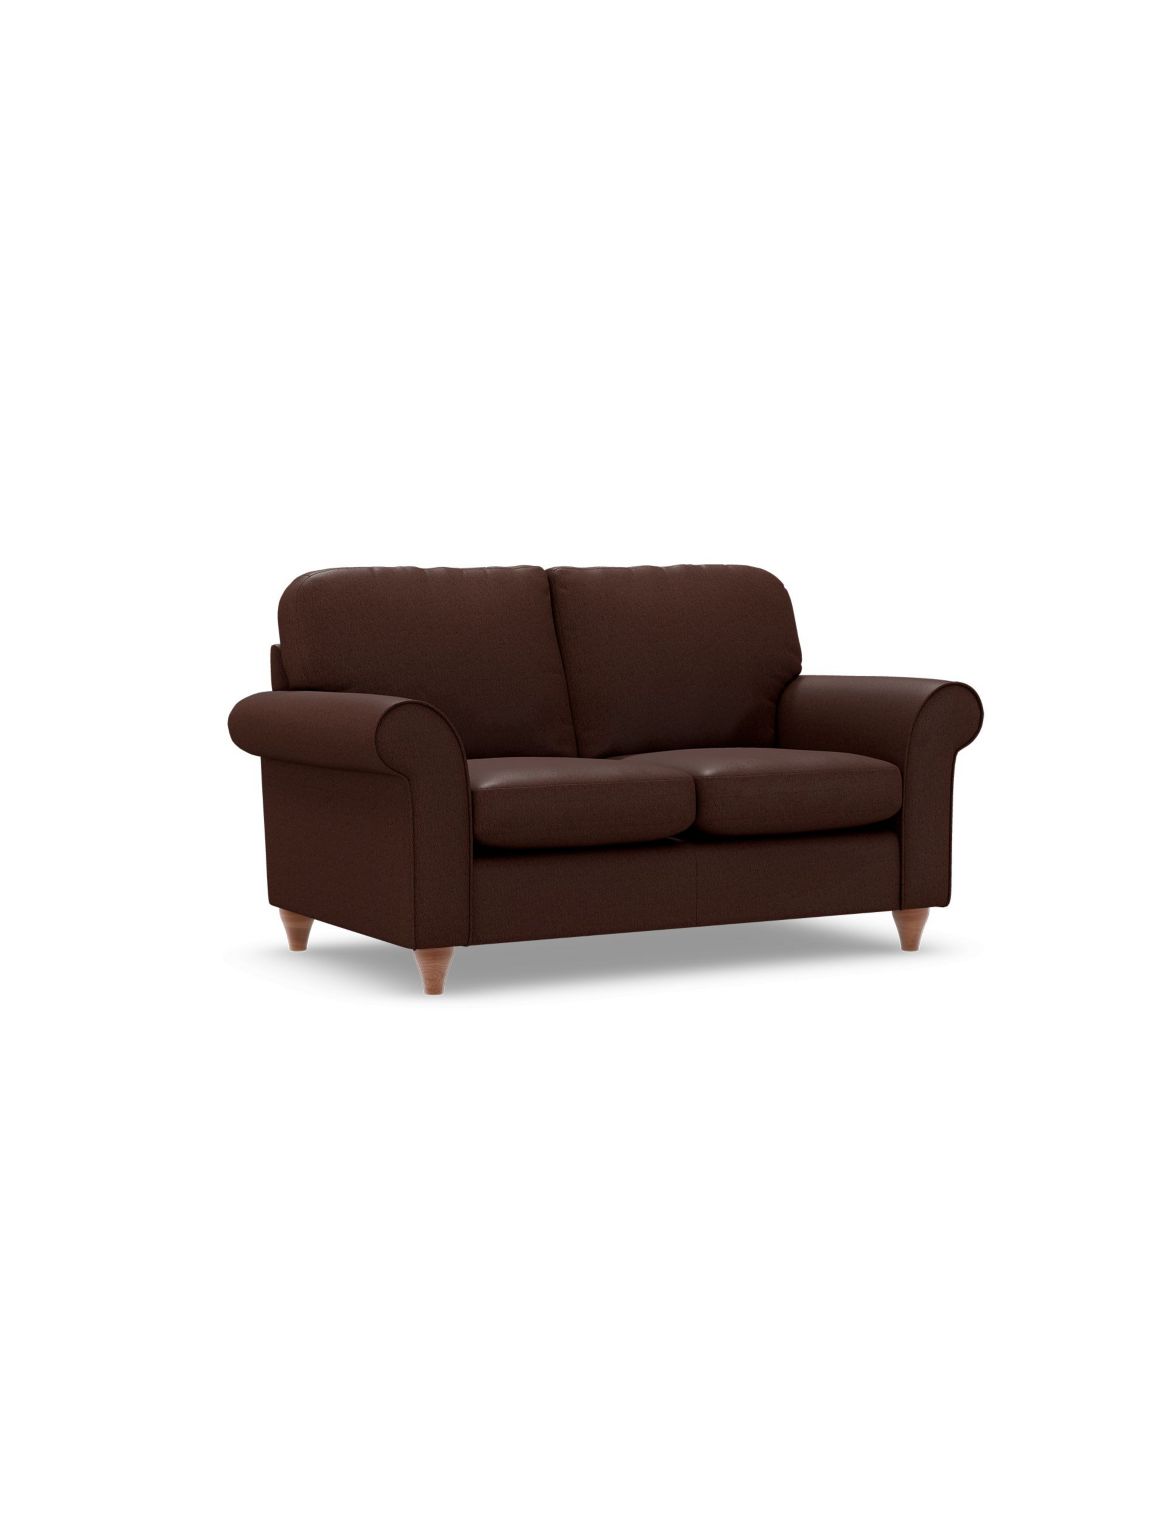 Olivia Compact Sofa brown